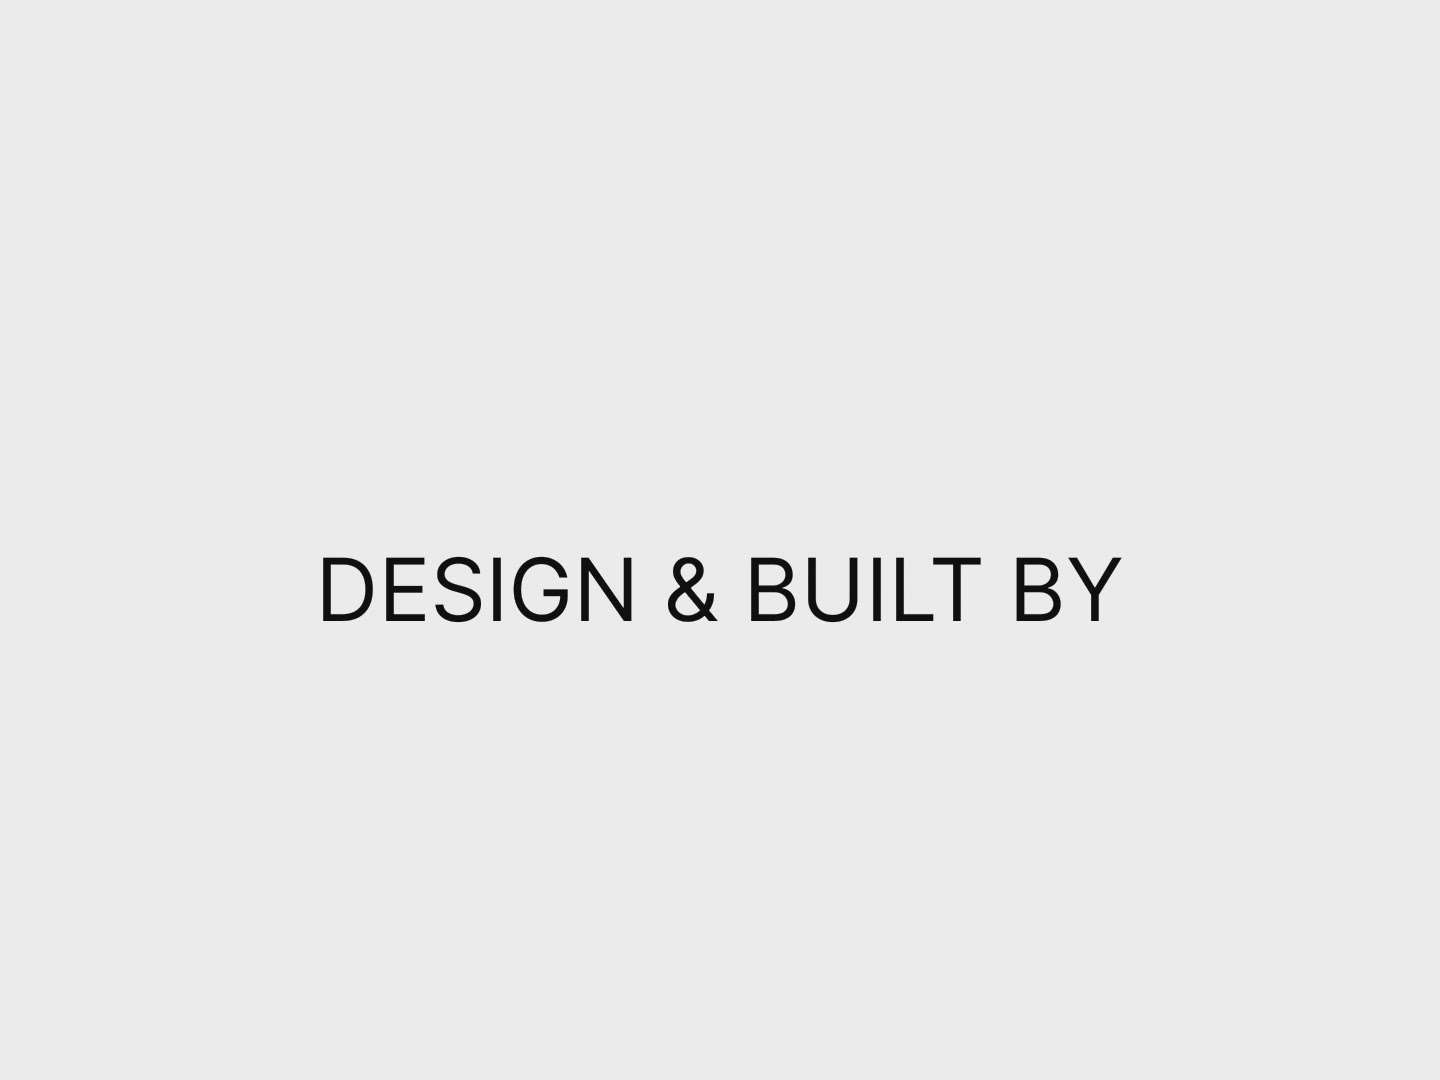 #HouseRenovation  #KitchenRenovation  #Best_designers  #best_architect  #HouseDesigns  #LivingroomDesigns  # #Designs